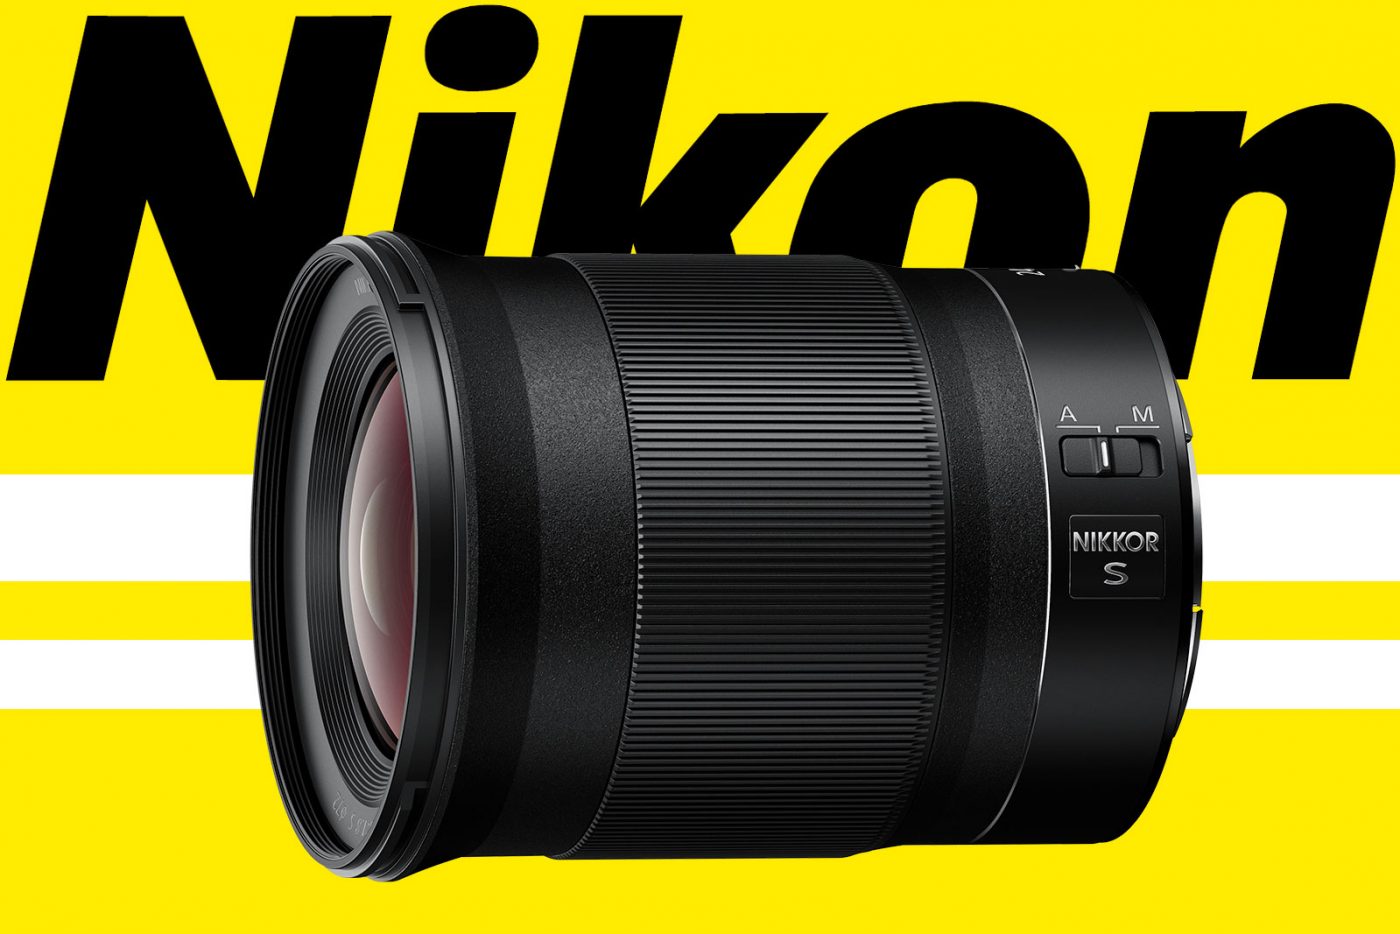 Nikon Z 24mm f/1.8 S lens product photo